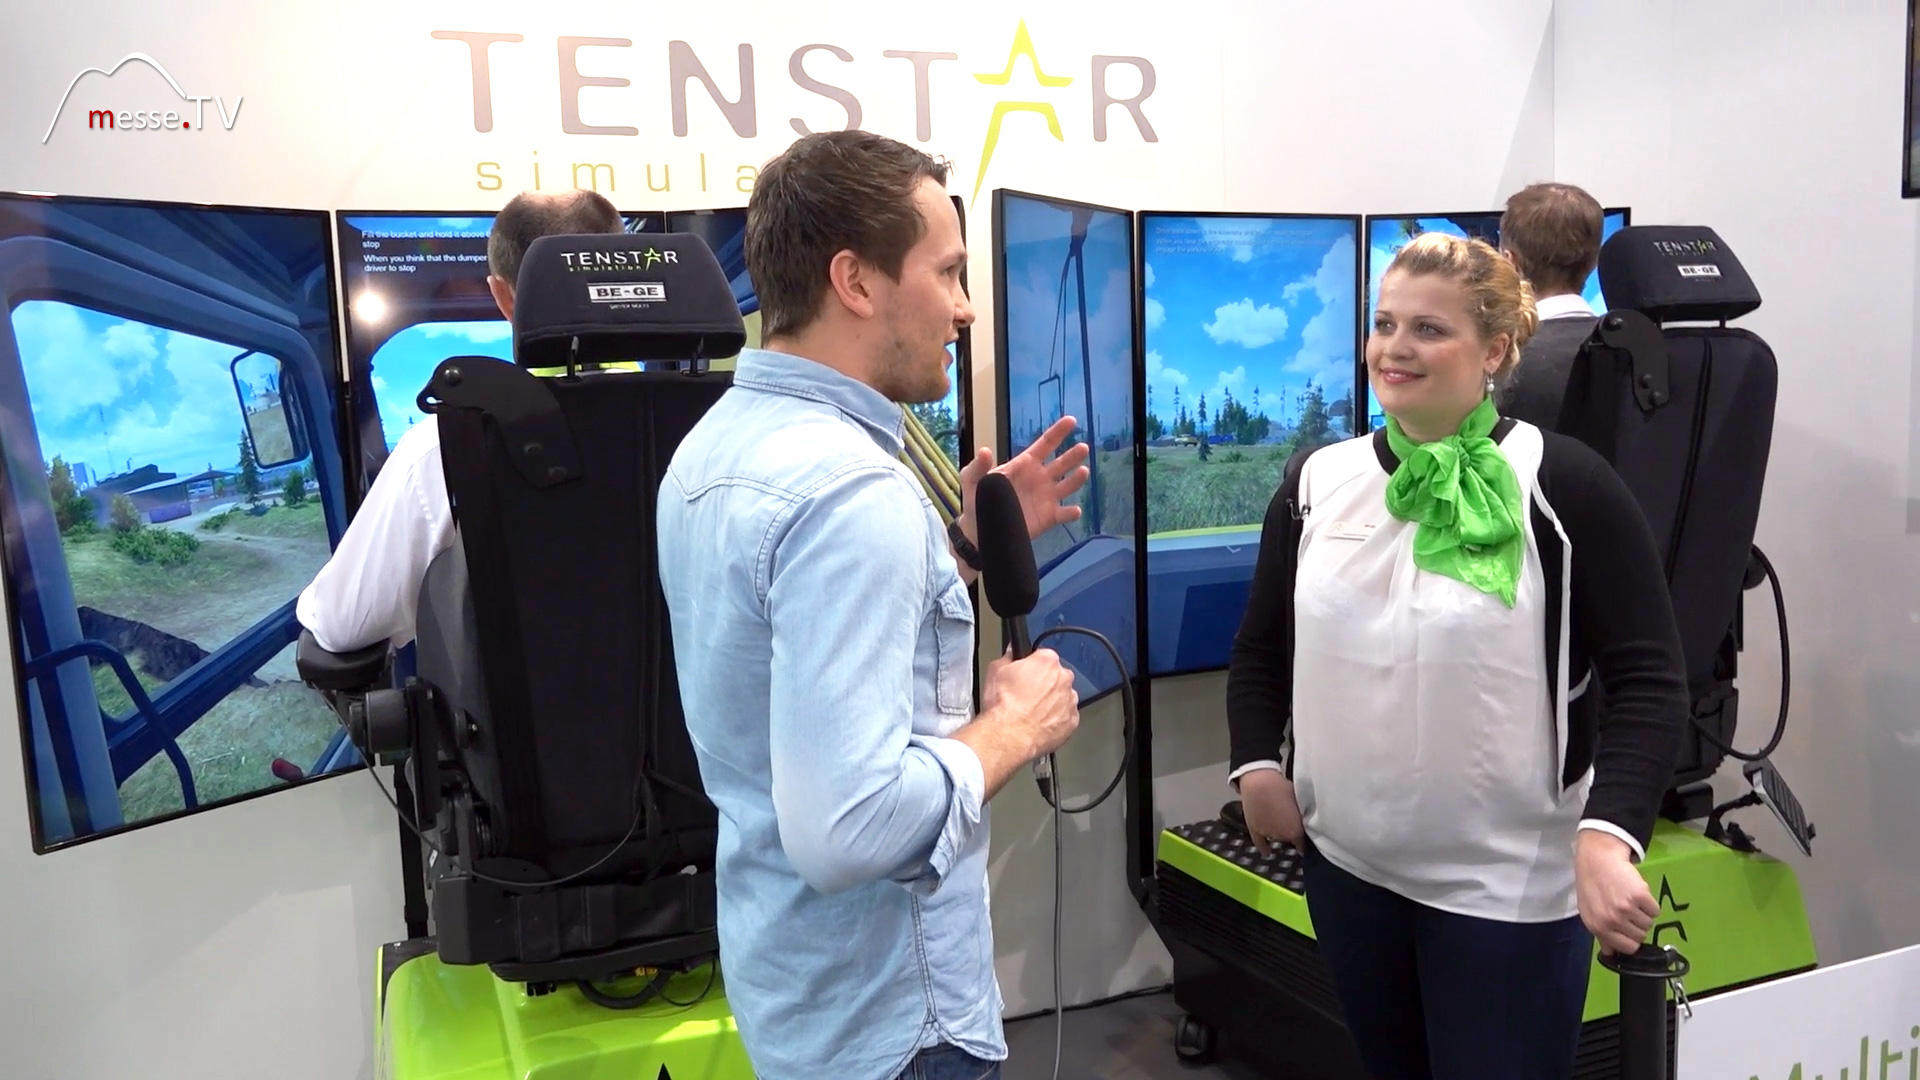 Messe TV Berichterstattung Tenstar Simulation bauma 2016 Messe München